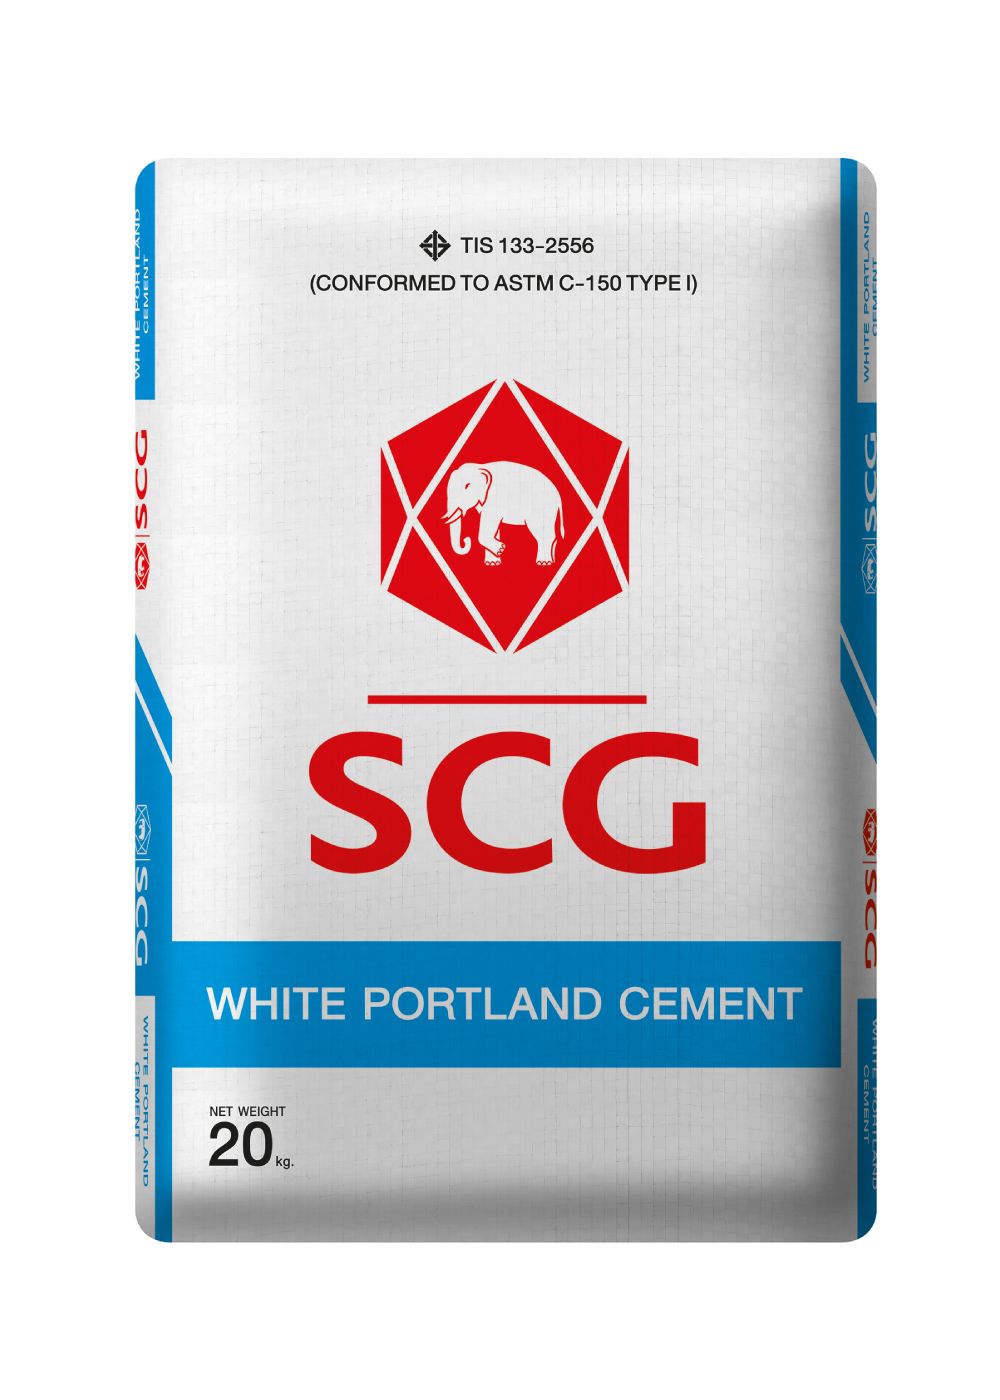 White Portland Cement Type I